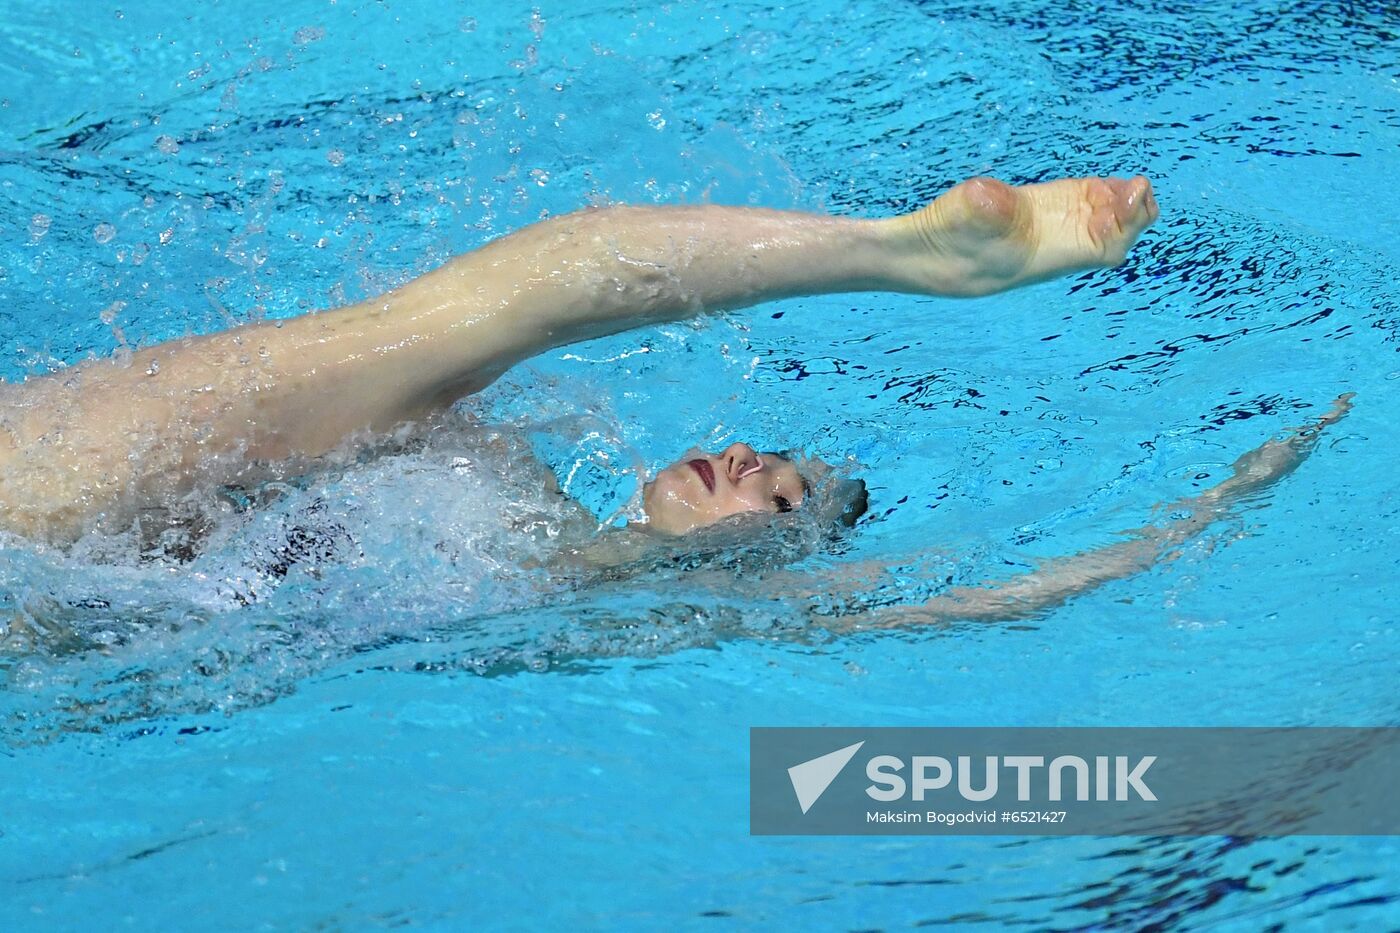 Russia Artistic Swimming World Series Gala Exhibition